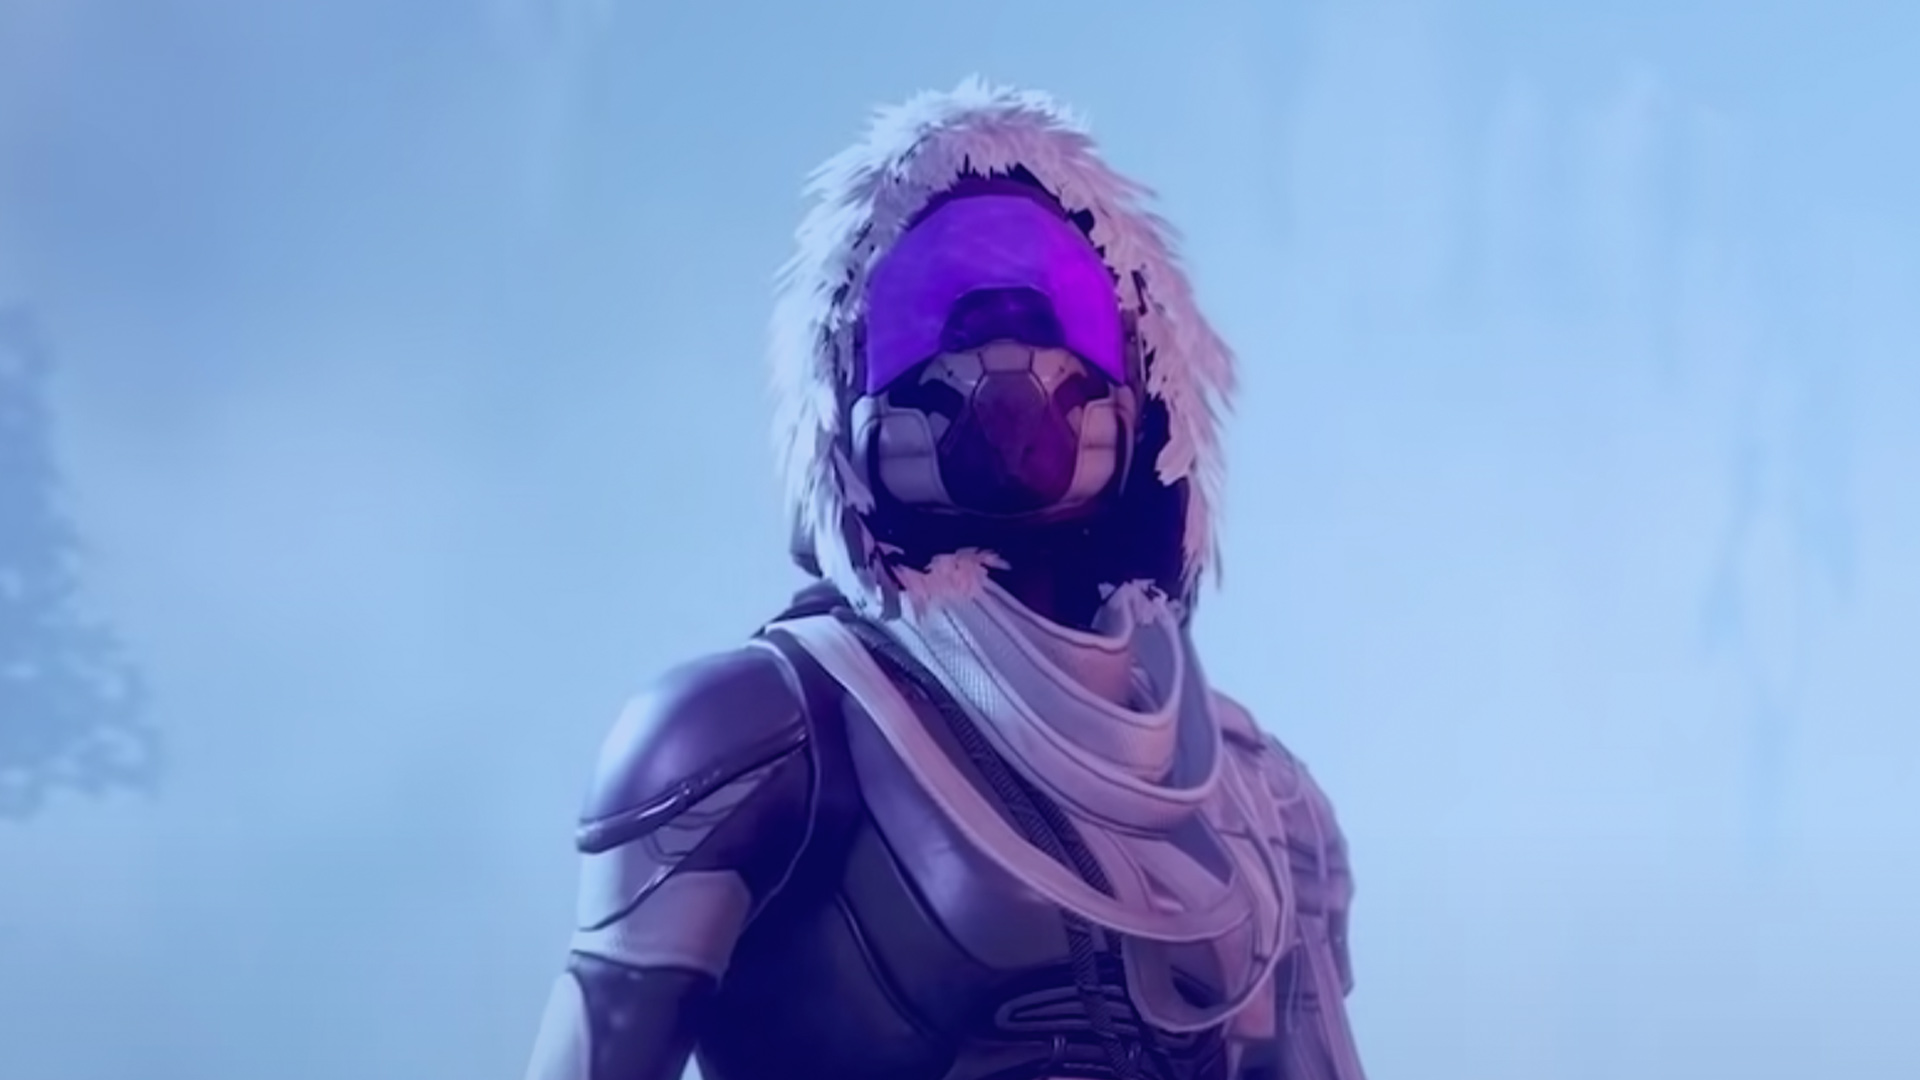 Destiny 2 blue weapons, gear won’t drop after players reach soft cap